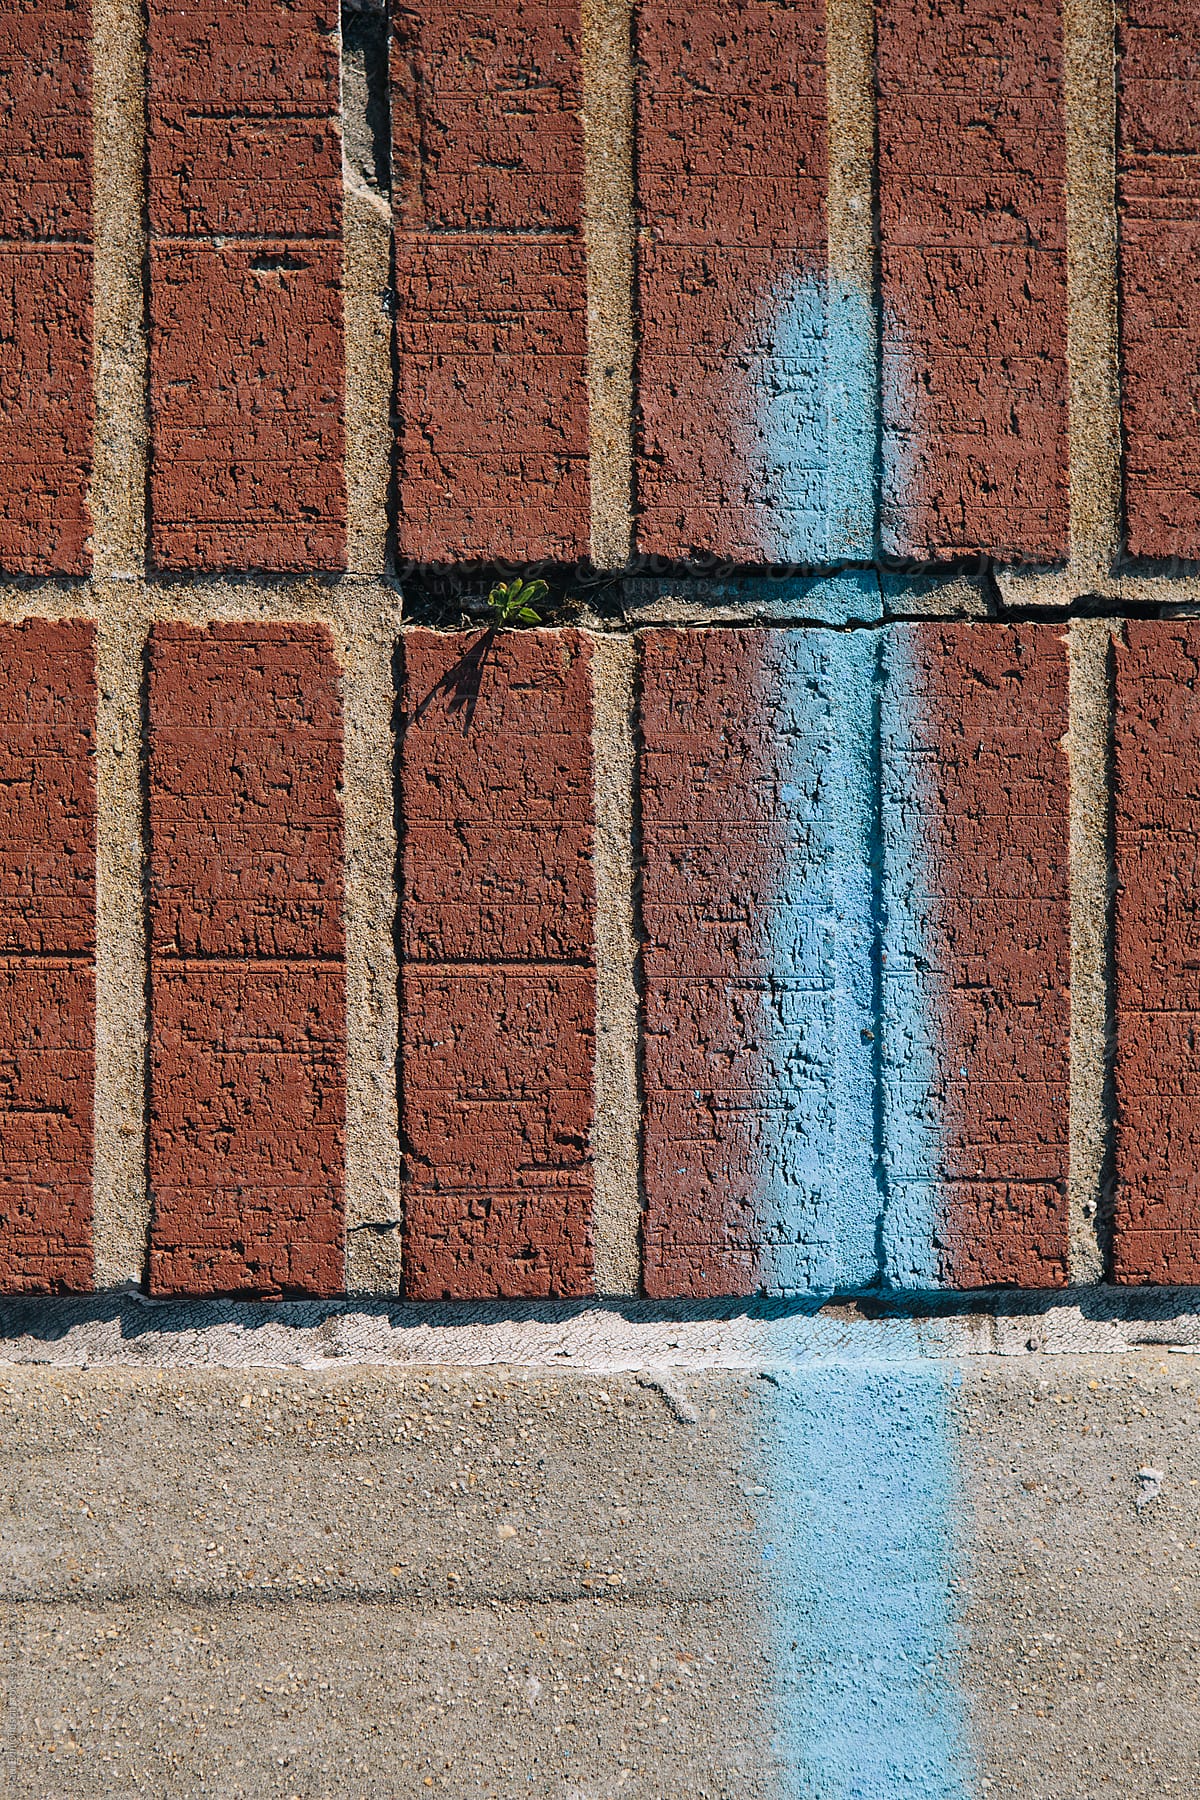 Detail of blue spray paint on brick sidewalk